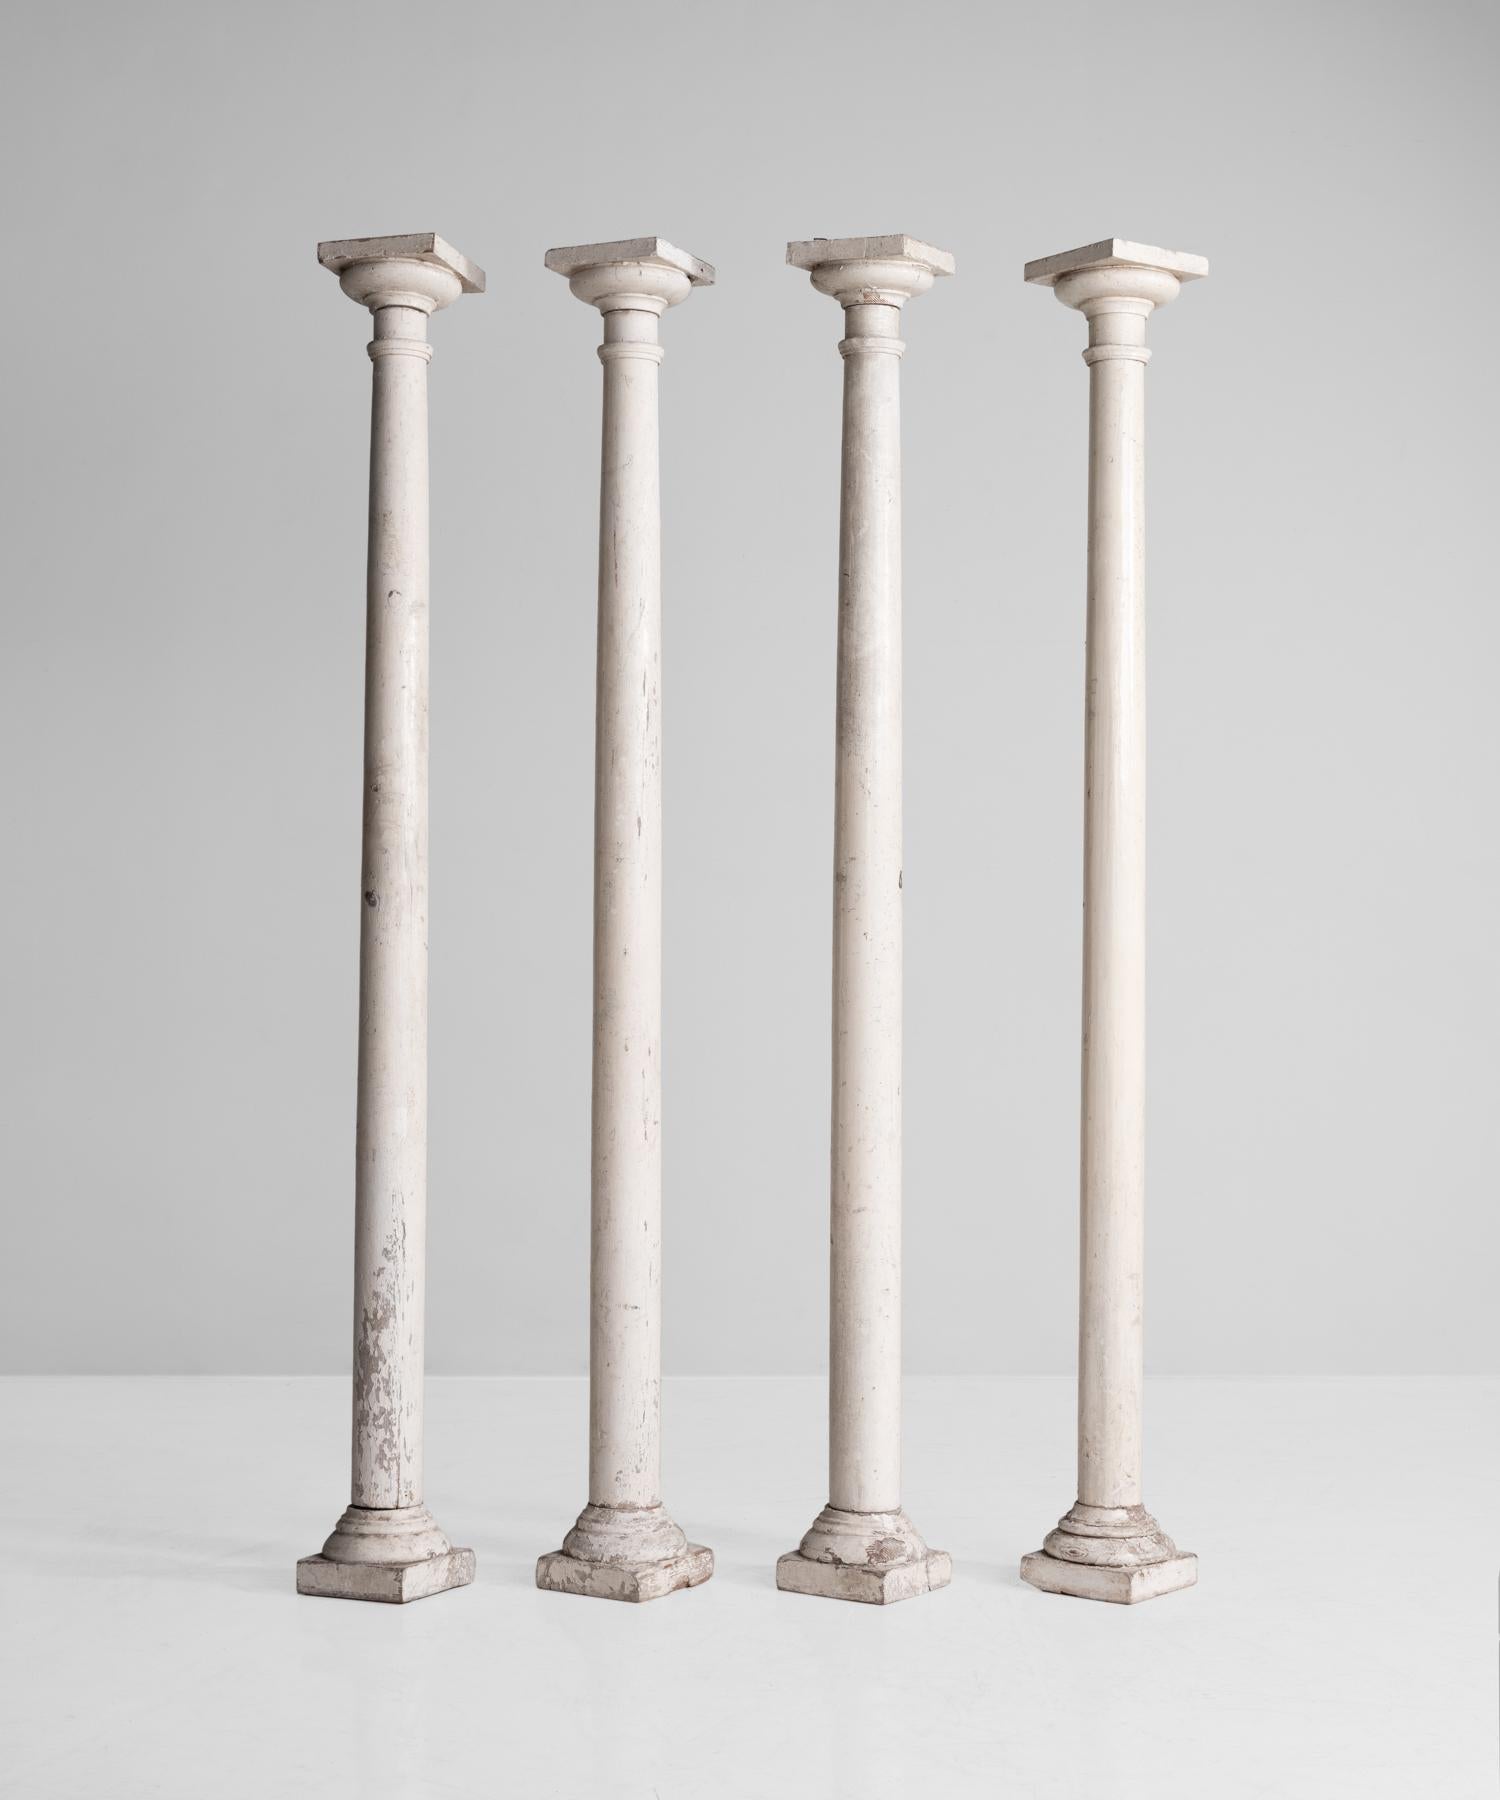 Set of (4) Georgian pine columns, circa 1760.

Slender, decorative forms with original paint.